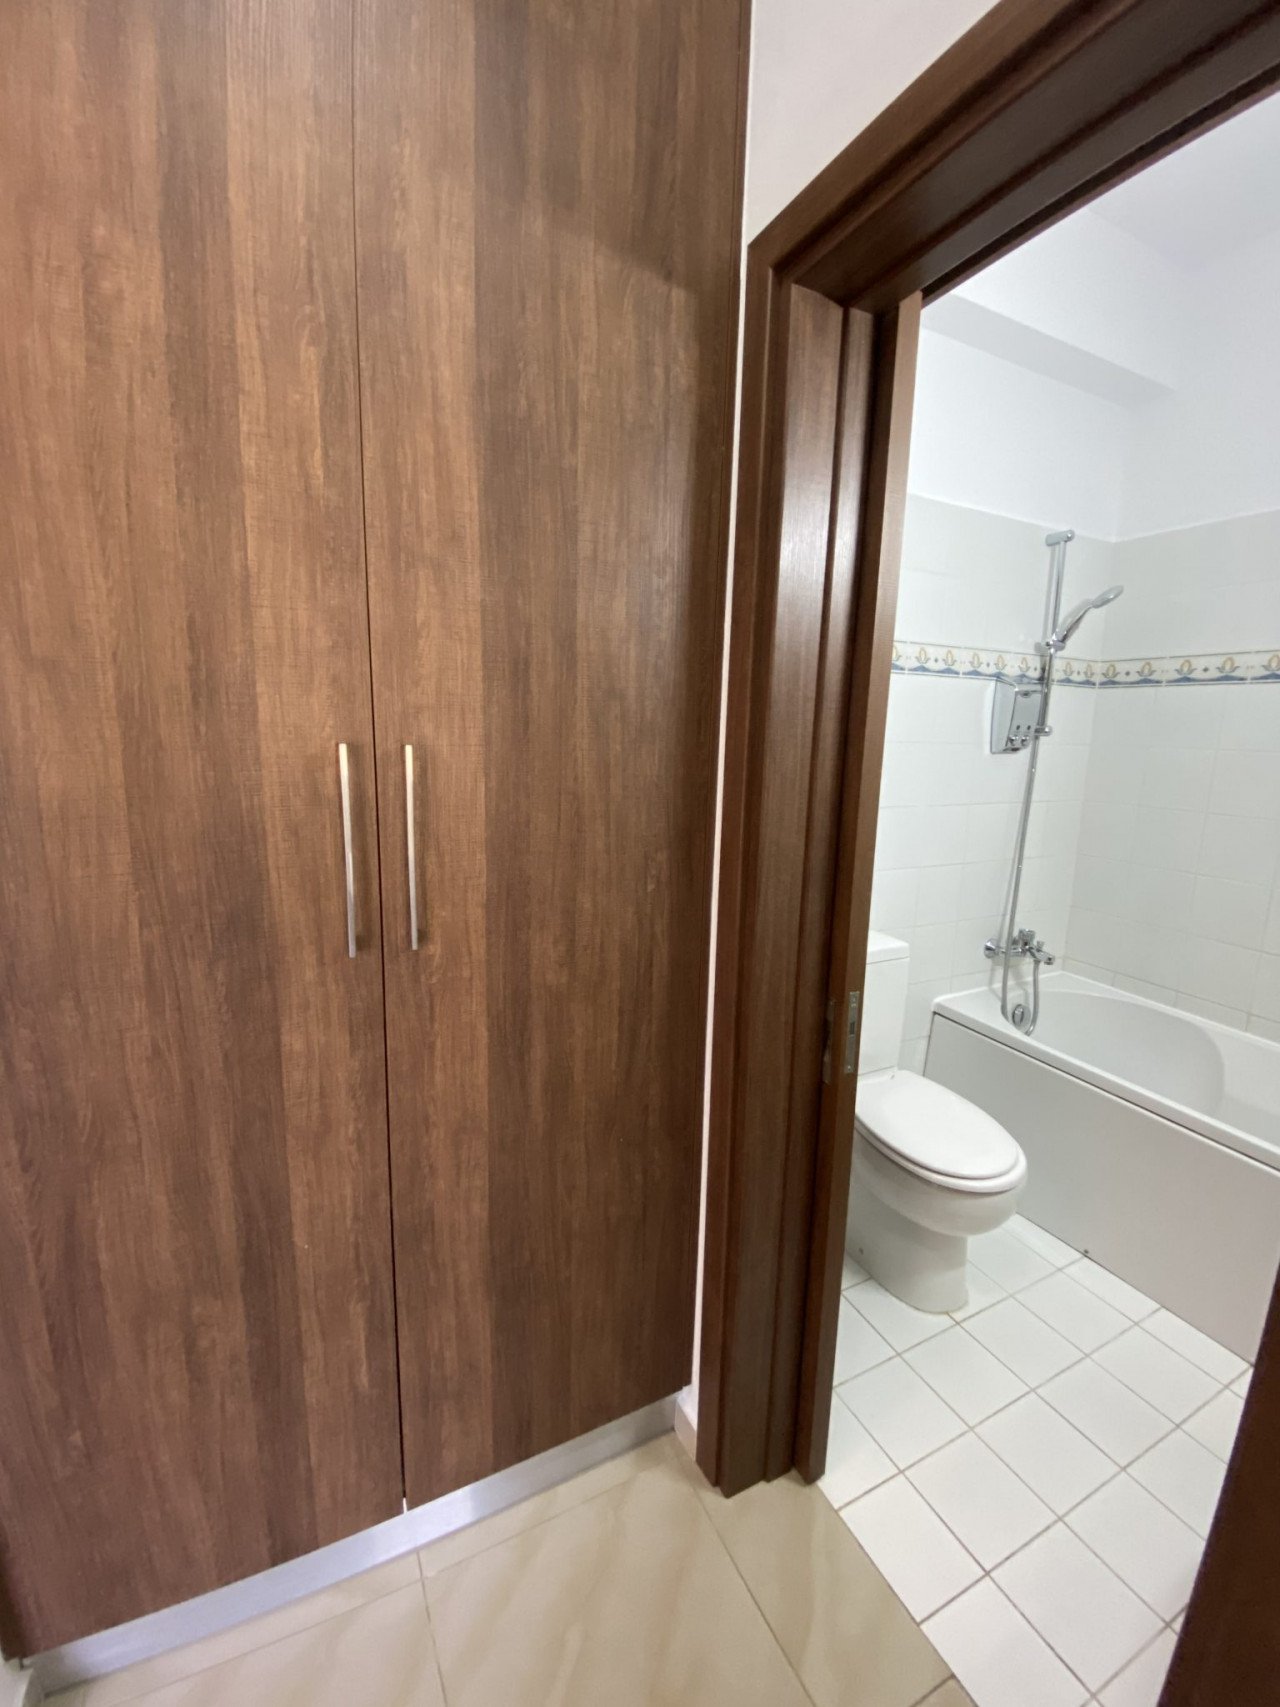 For Sale: Apartment (Flat) in Arakapas, Limassol  | Key Realtor Cyprus